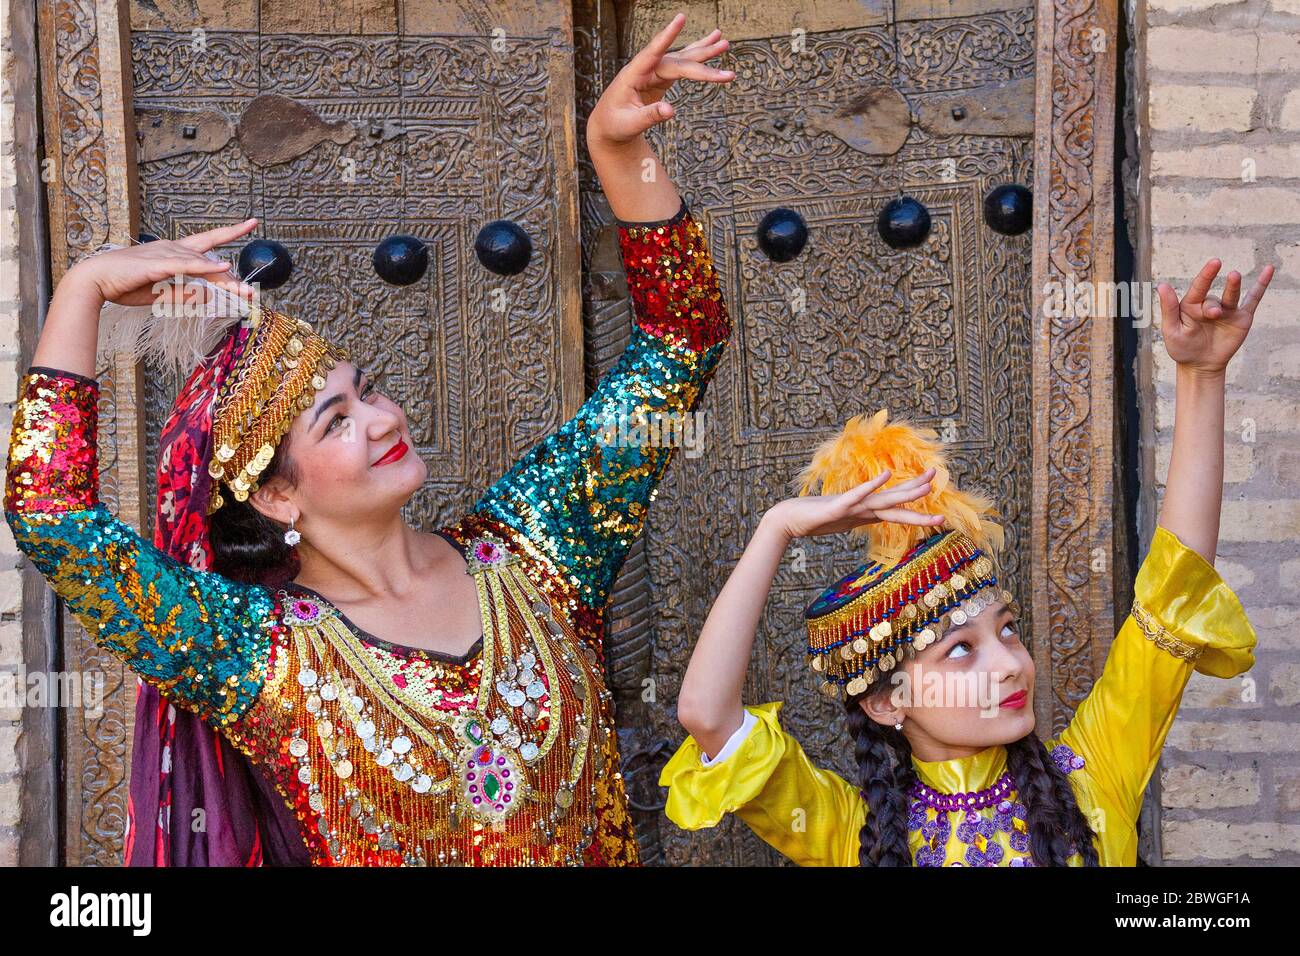 Damas uzbekas con ropa local que realizan danzas tradicionales, en Khiva, Uzbekistán Foto de stock